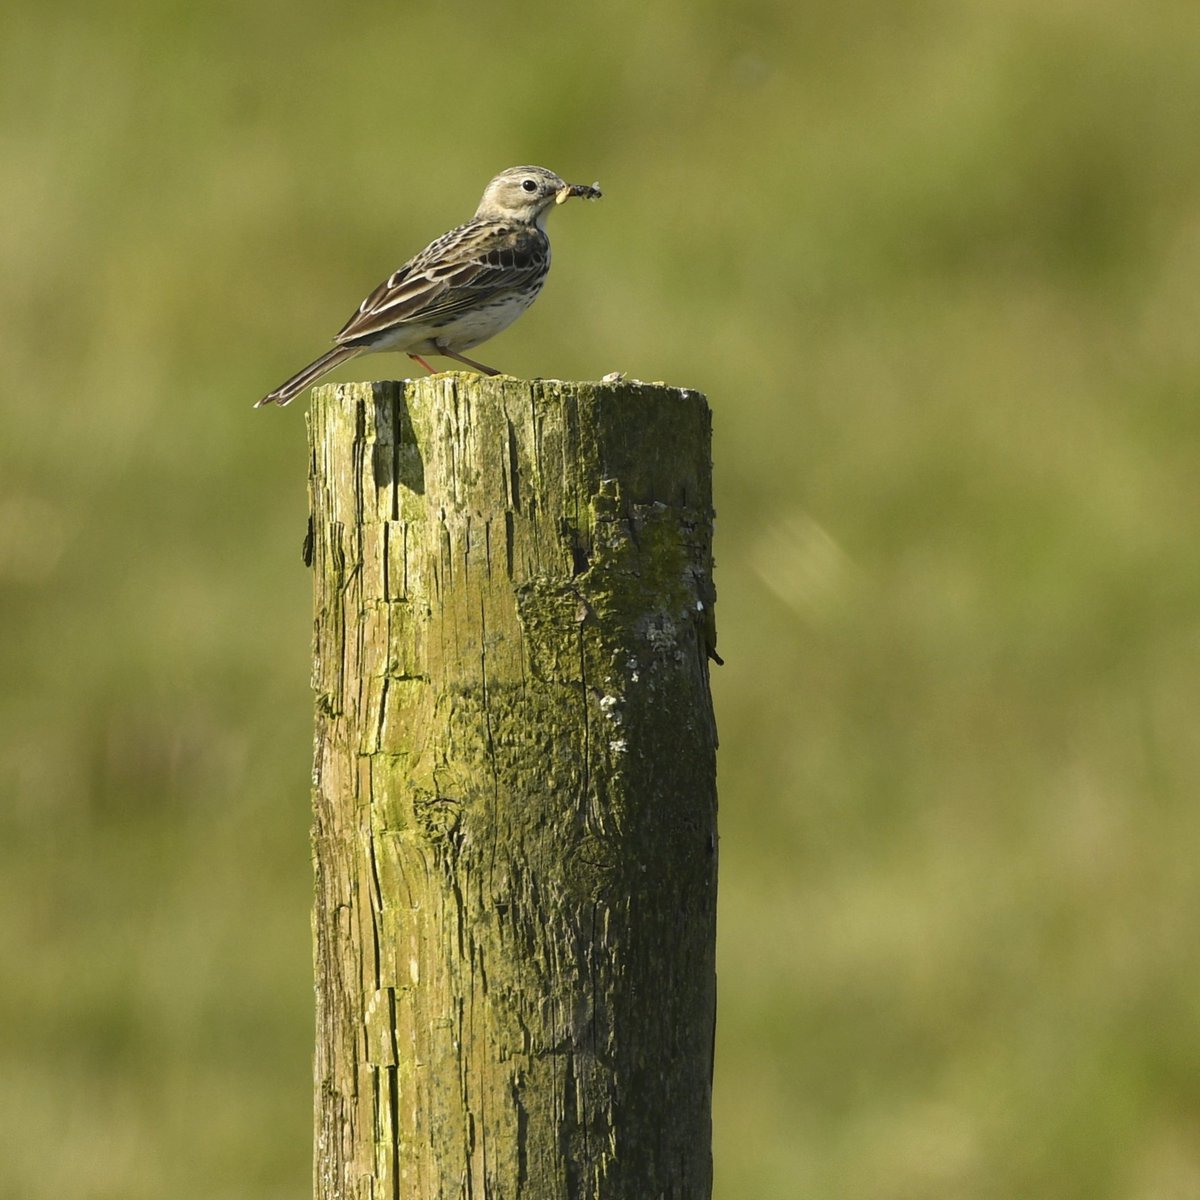 A #MeadowPipit on a wooden pole. 

#TwitterNatureCommunity #BirdsofTwitter #nature #birdtwitter #wildlife #PipitFamily